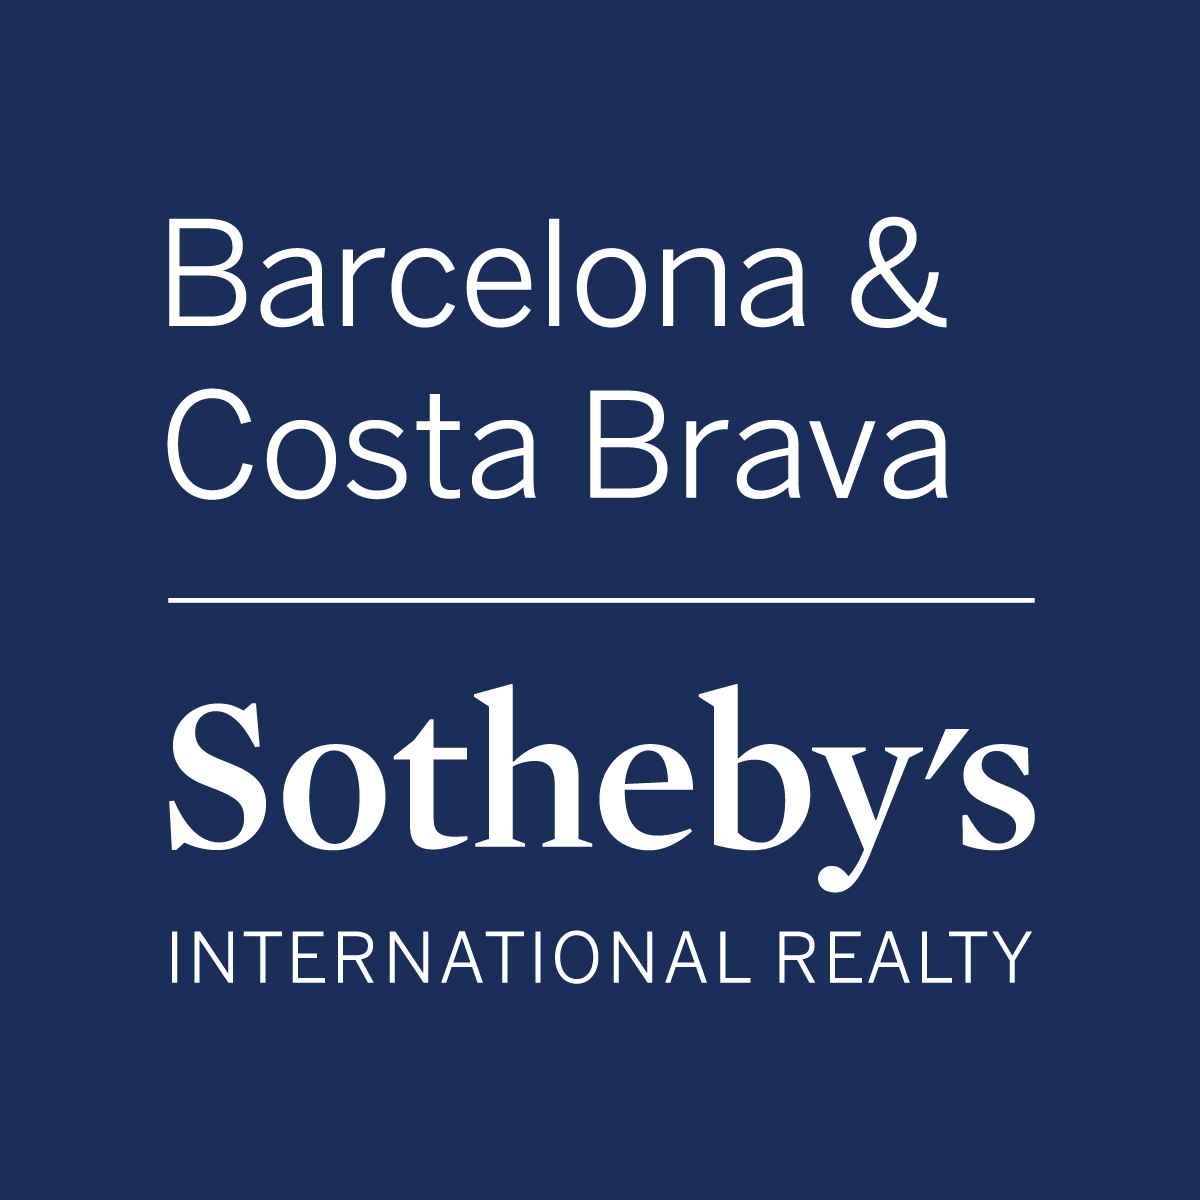 Barcelona & Costa Brava Sotheby's International Realty